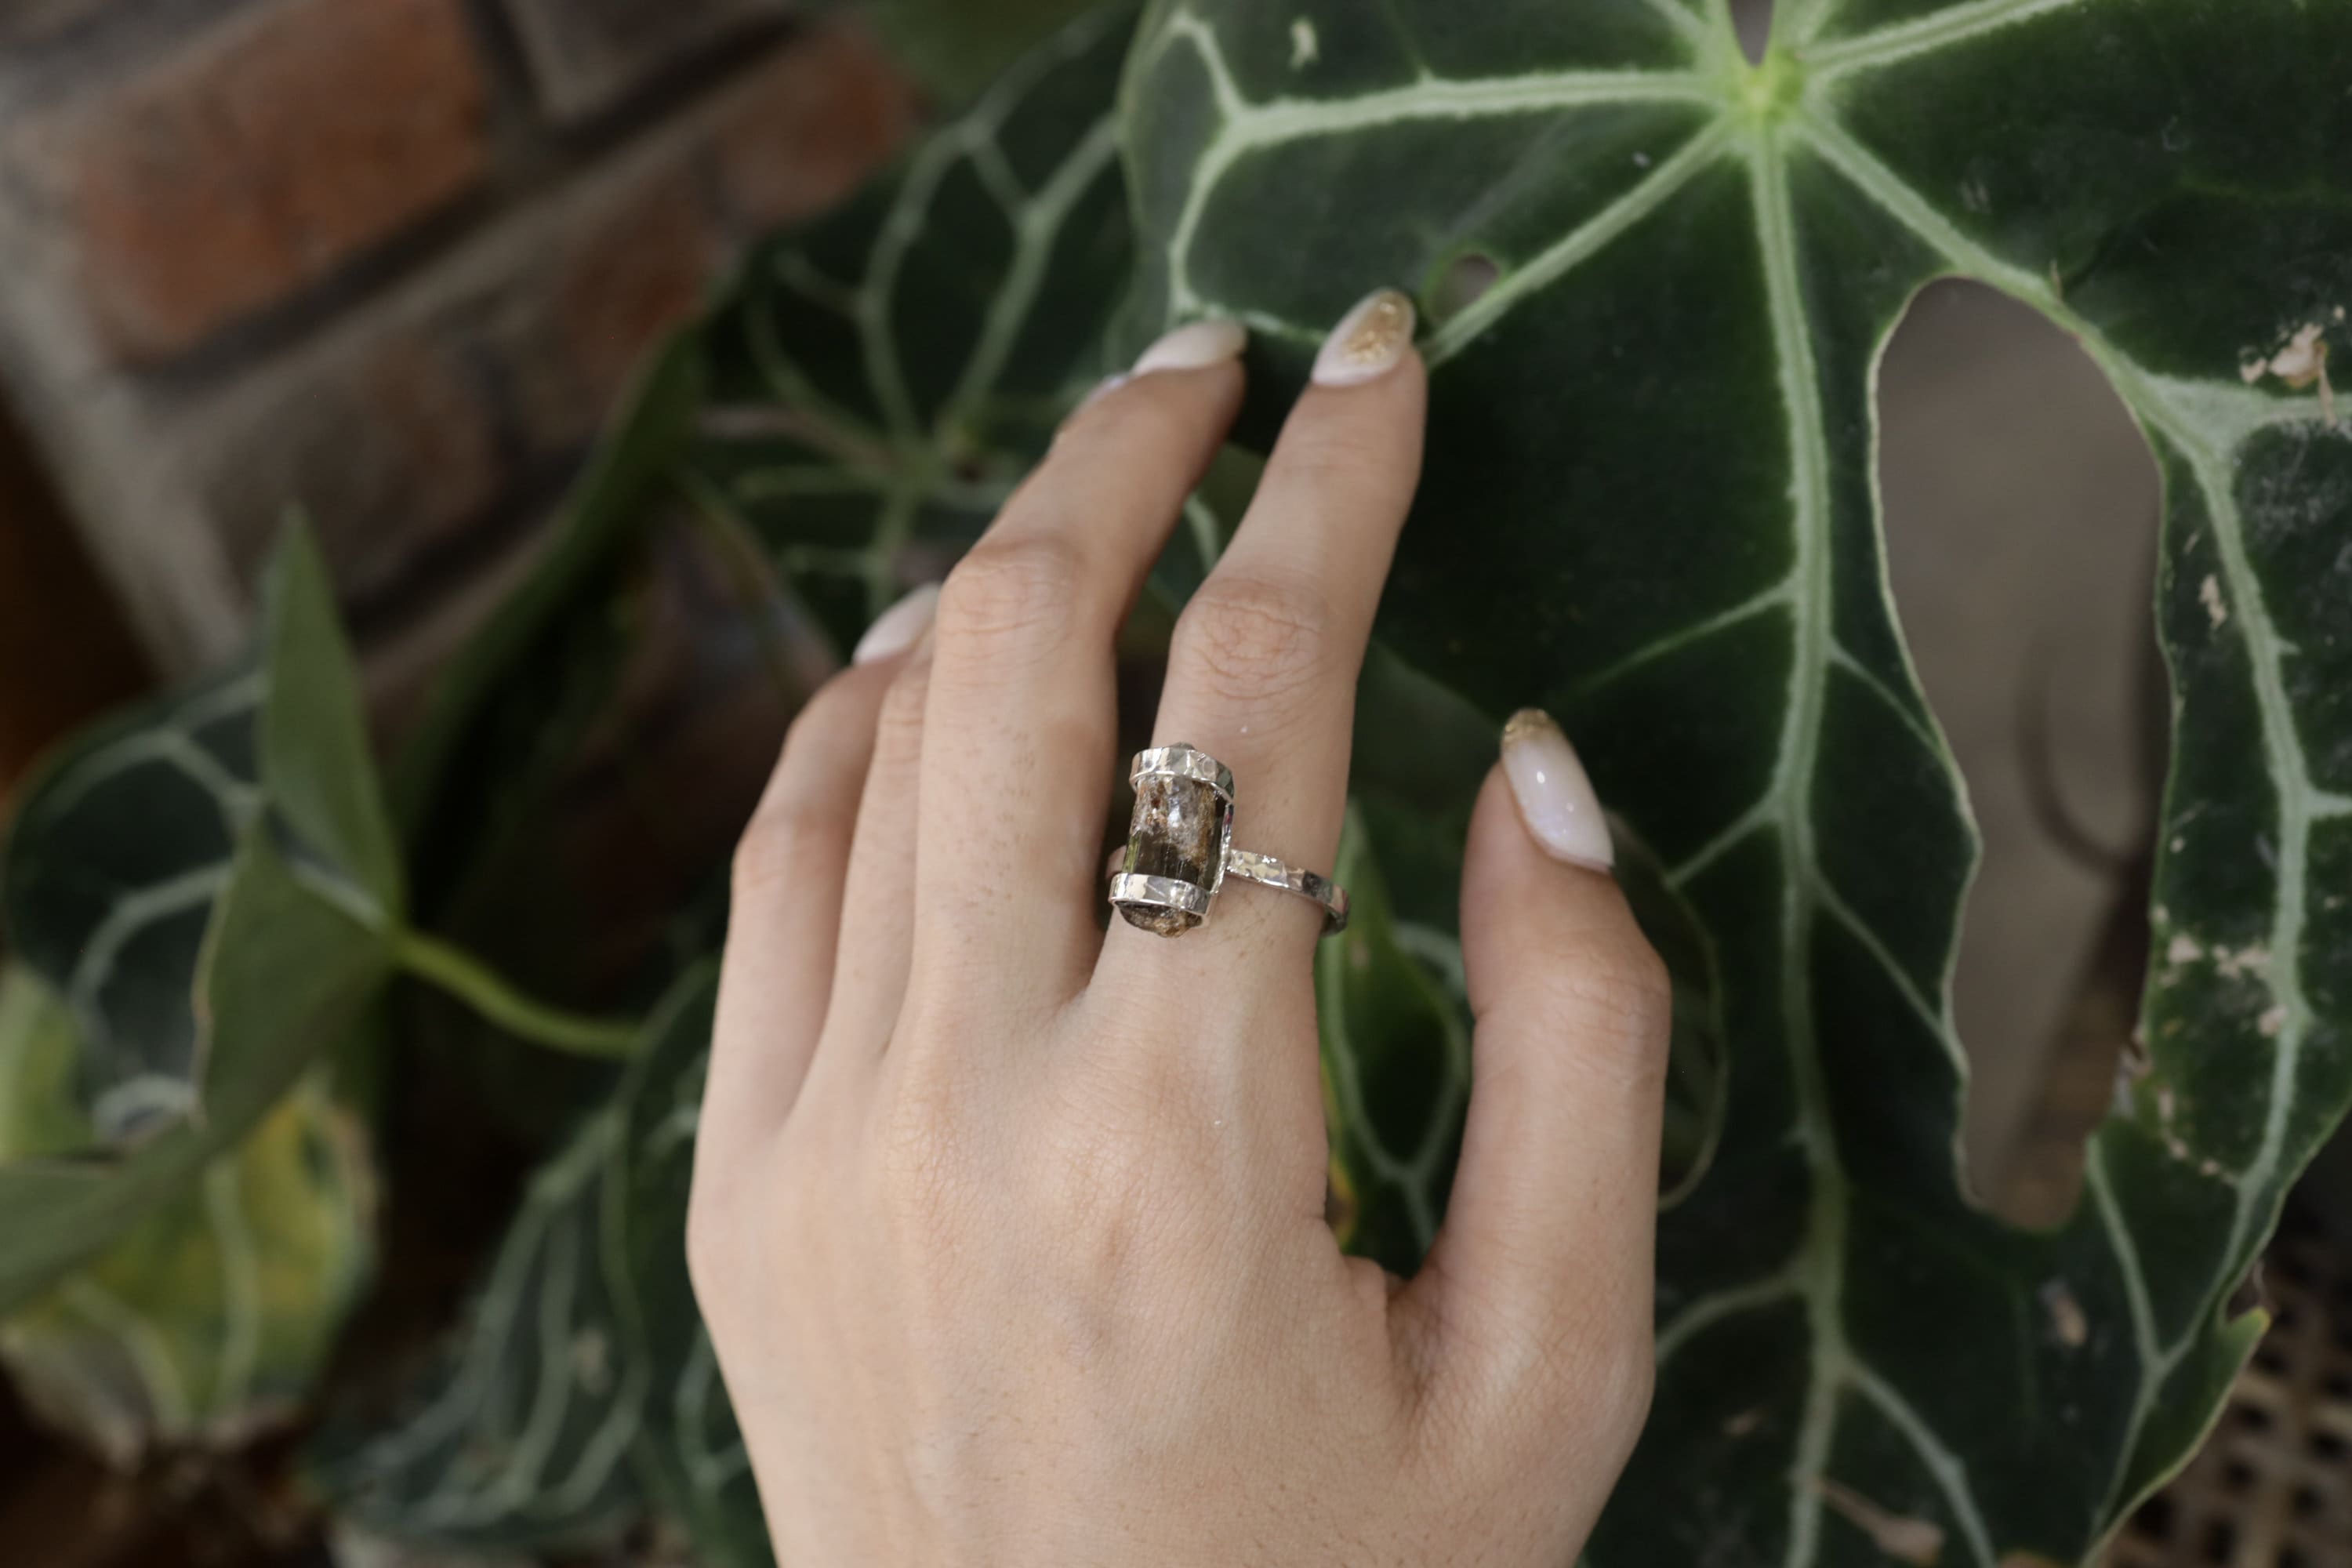 Earthen Elegance Gemmy Dravite Tourmaline Ring - Hammered & Shiny Finish - Sterling Silver Ring - Size 9 US